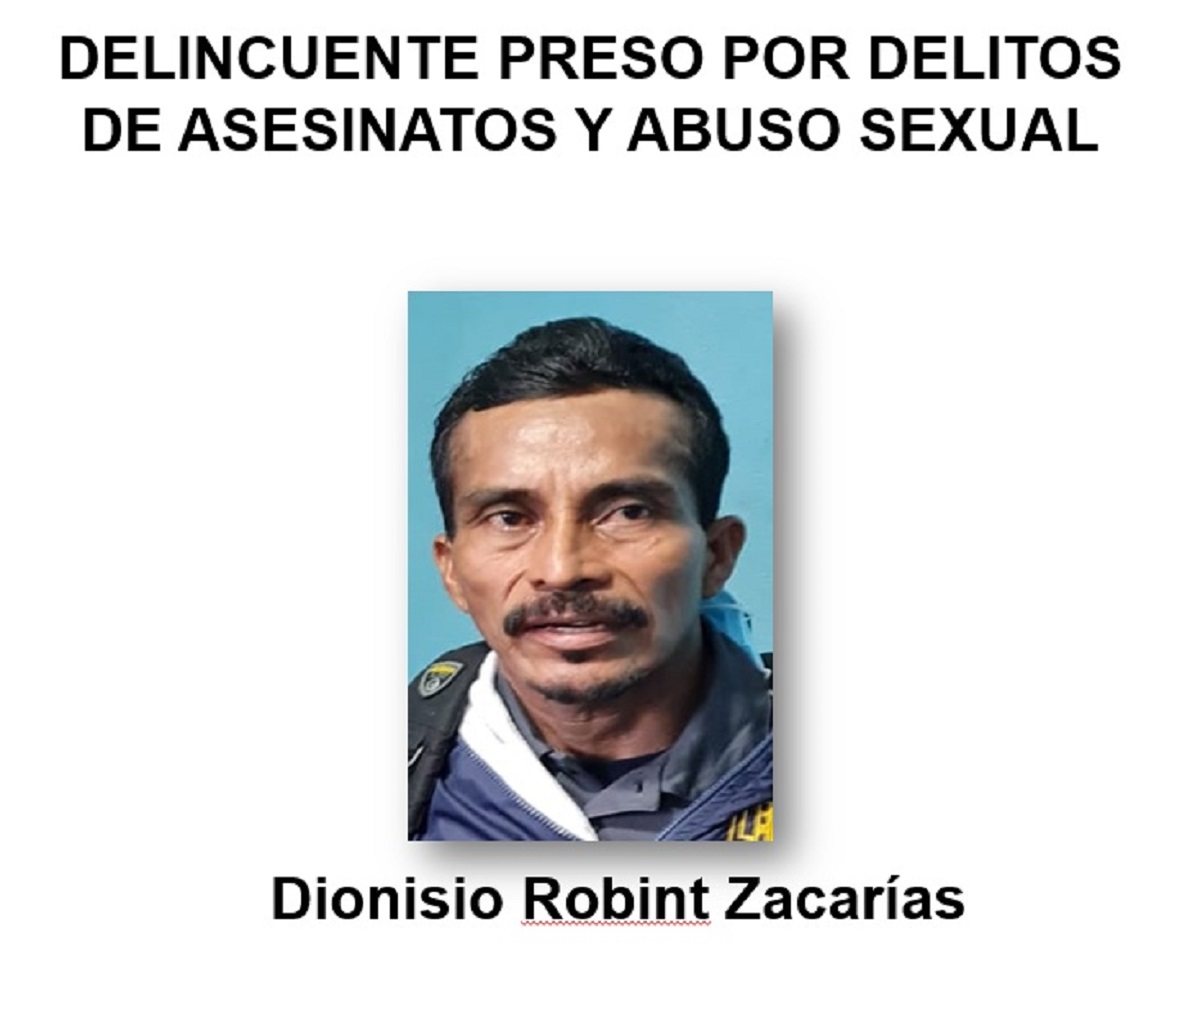 Dionisio Robint Zacarías